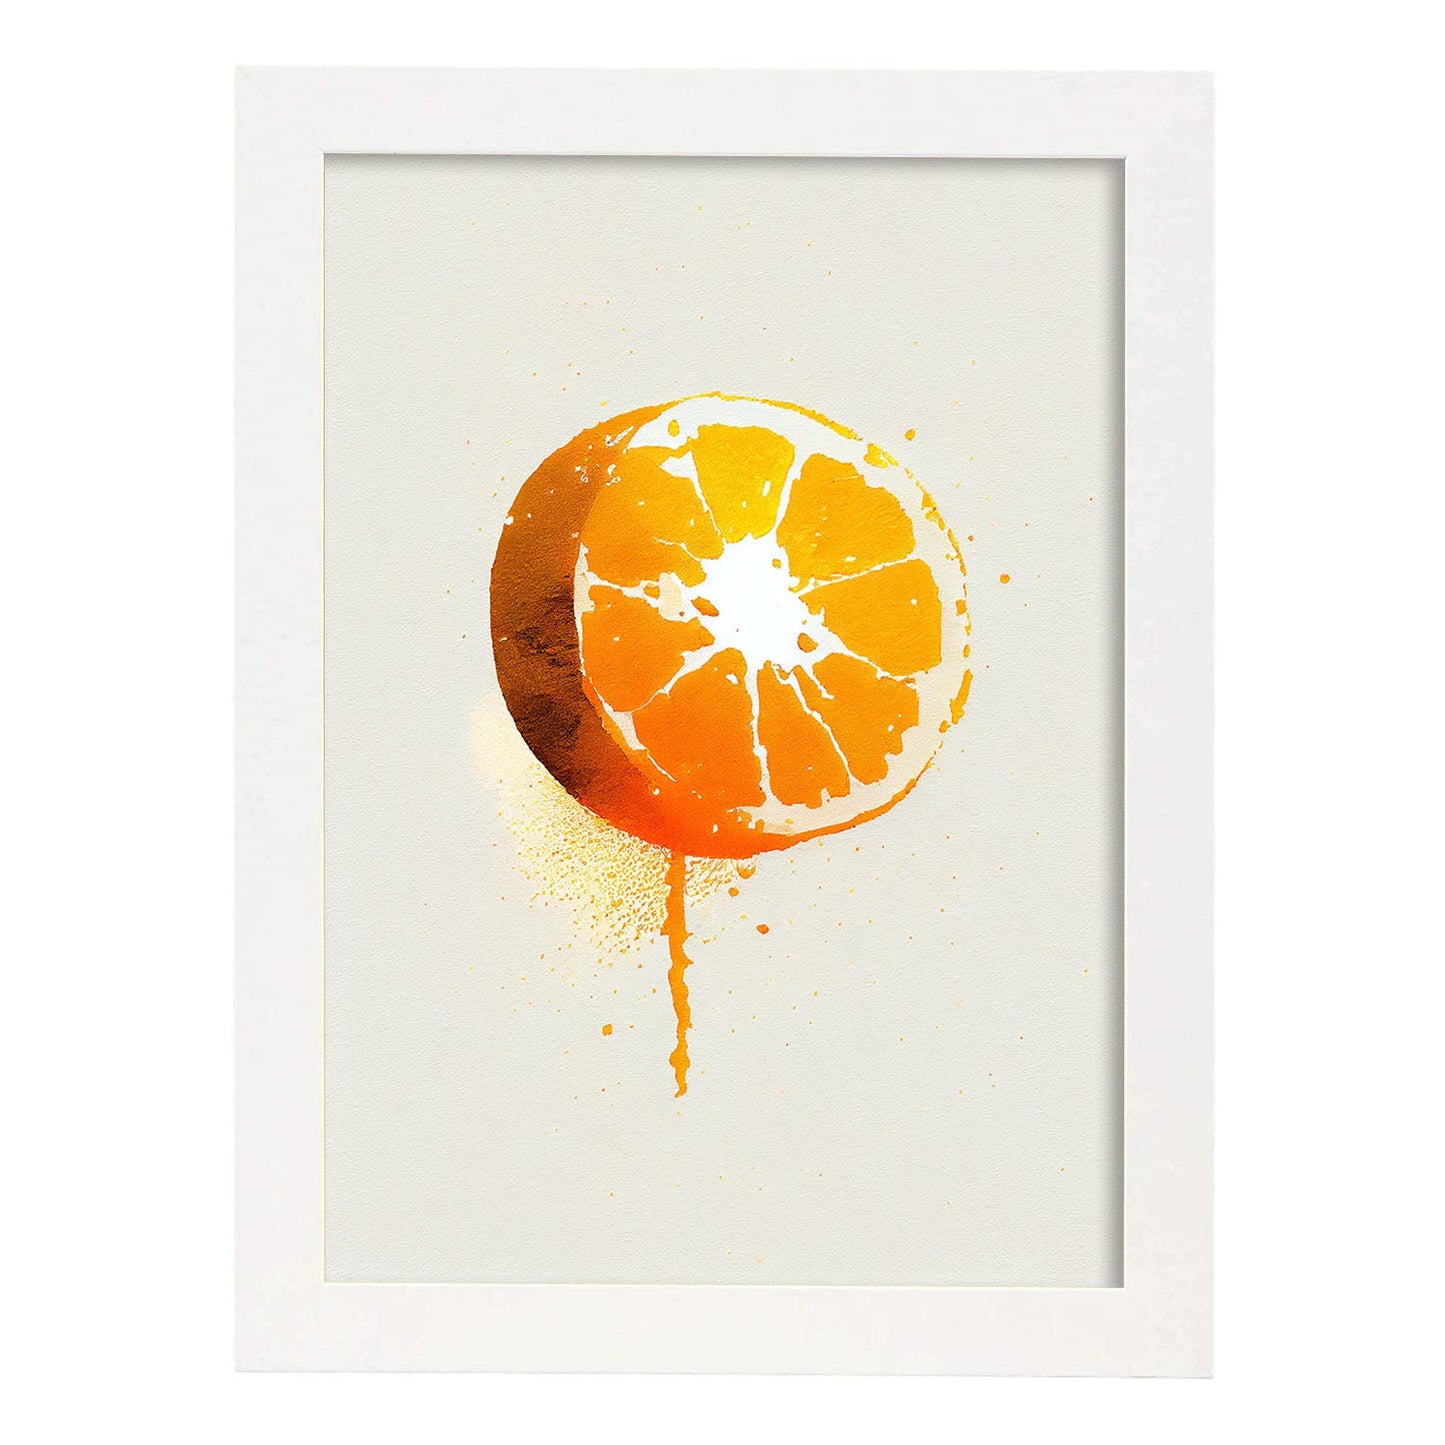 Nacnic minimalist Orange_2. Aesthetic Wall Art Prints for Bedroom or Living Room Design.-Artwork-Nacnic-A4-Marco Blanco-Nacnic Estudio SL